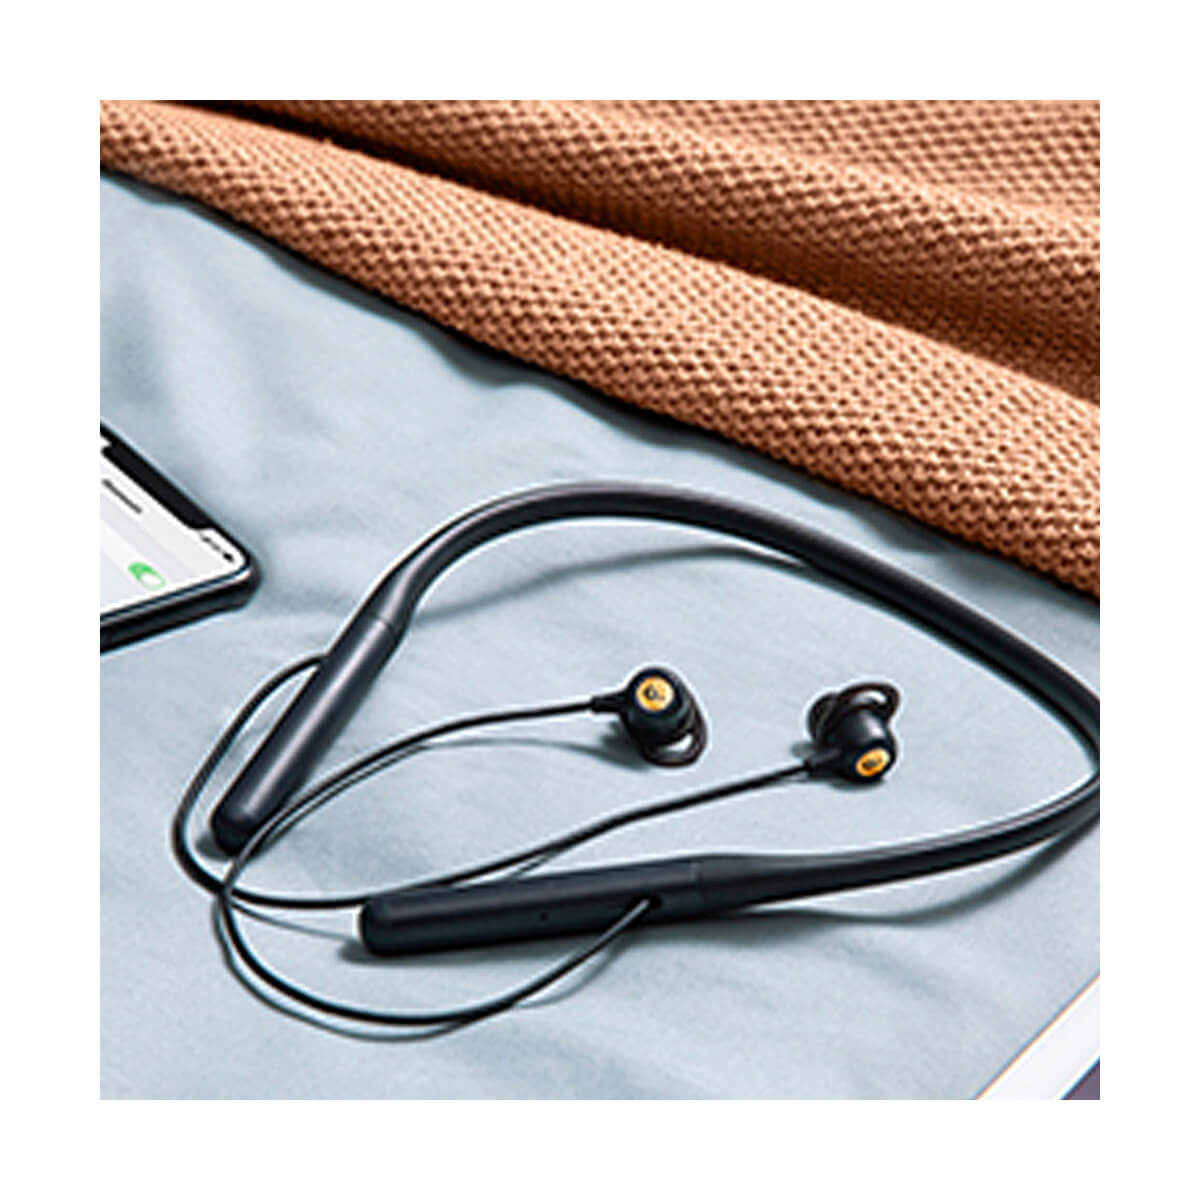 Life U2 Bluetooth Neckband Headphones